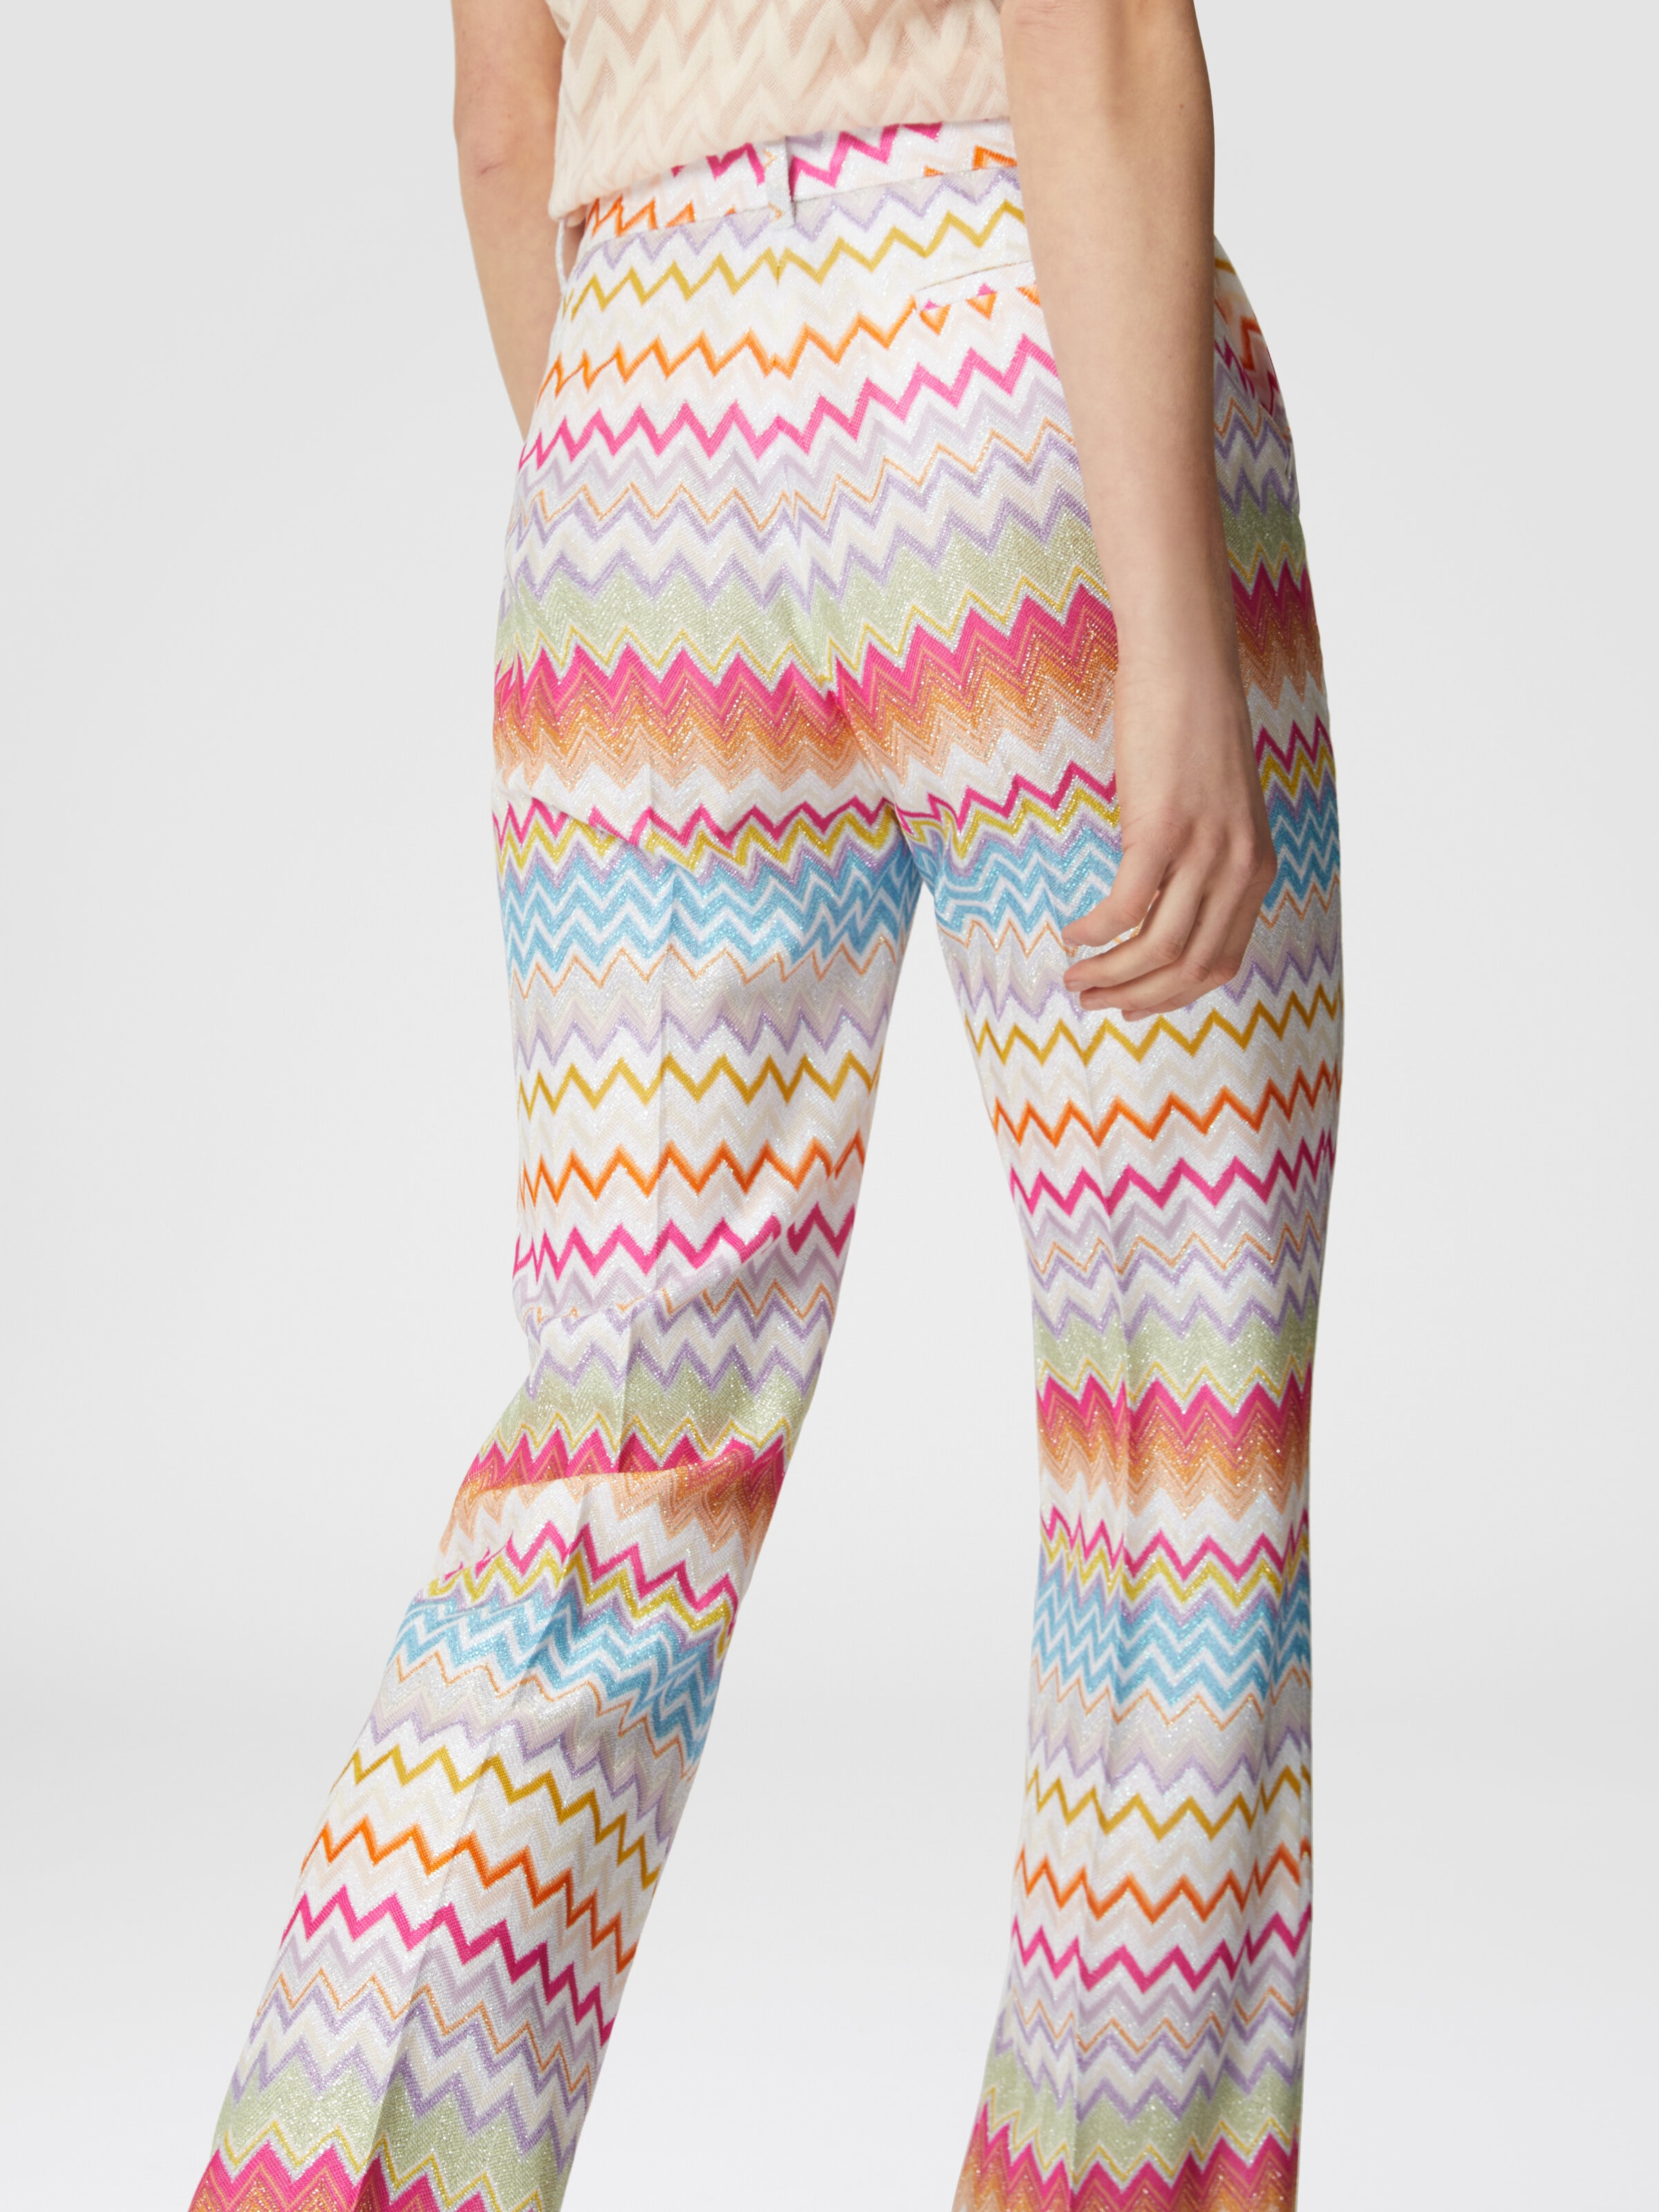 Capri trousers in chevron lamé knit with sequins, Multicoloured  - 4